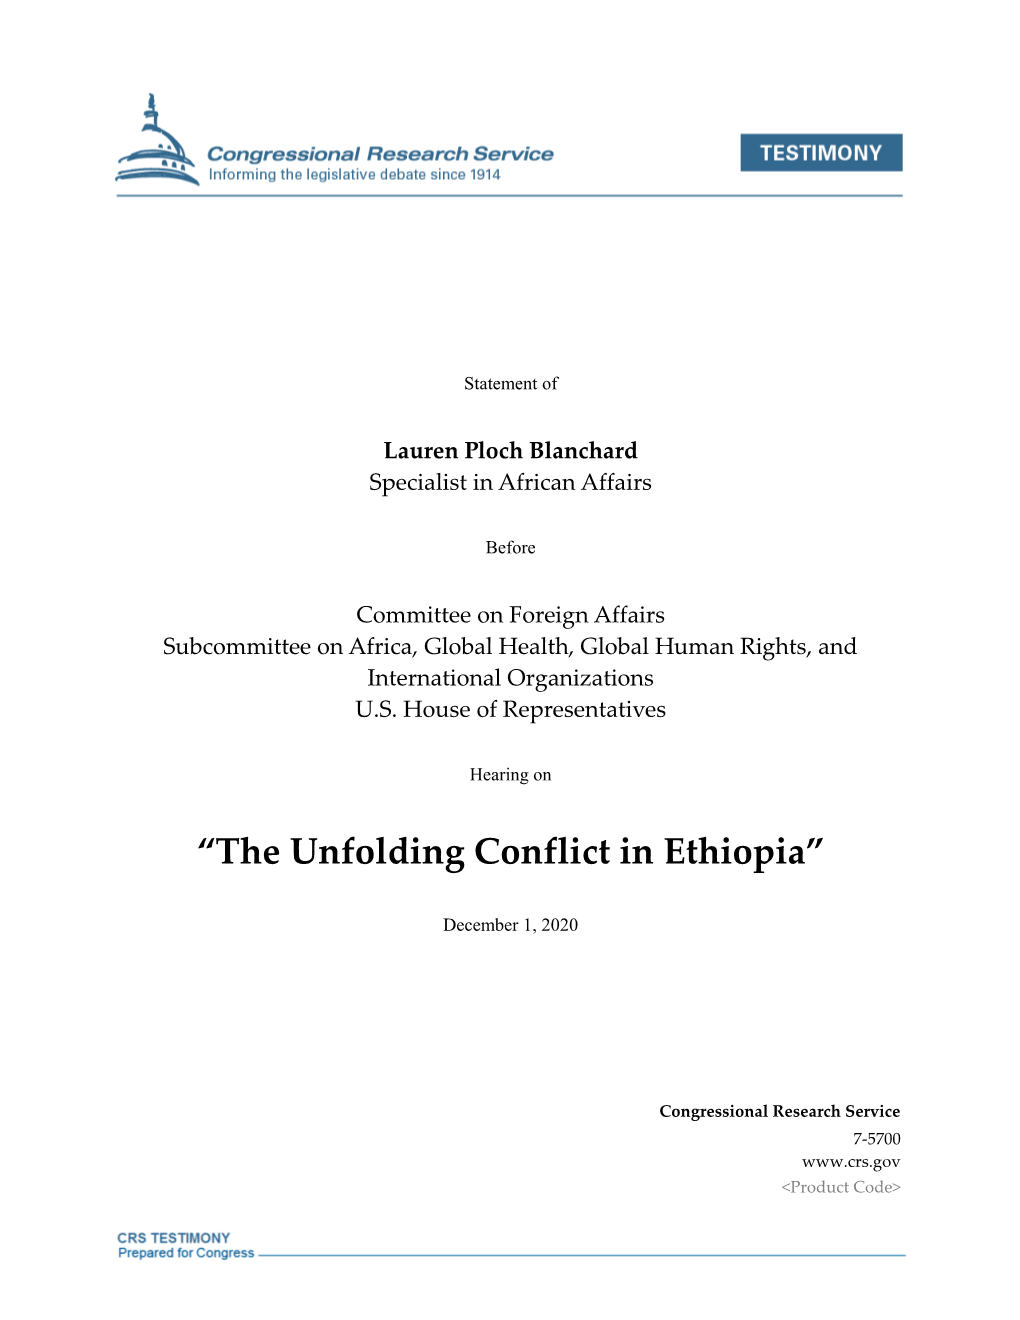 “The Unfolding Conflict in Ethiopia”